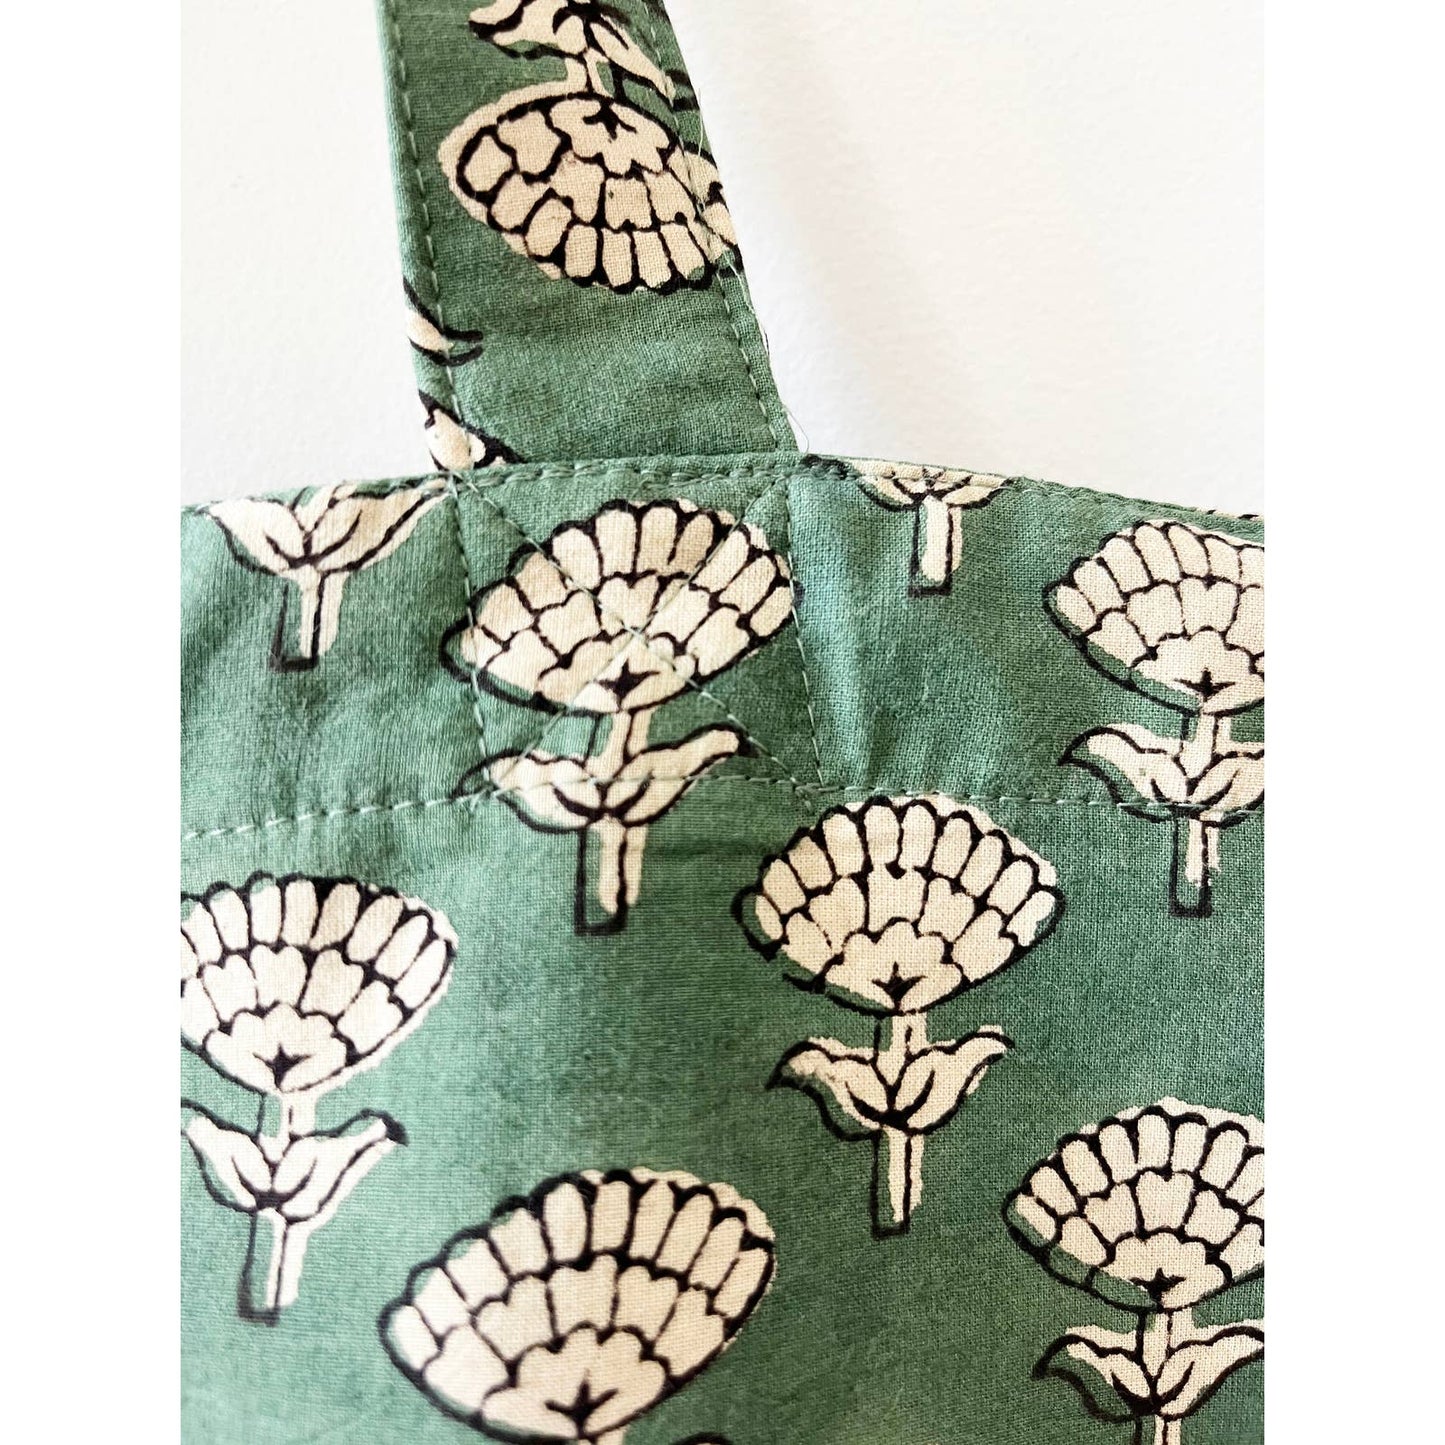 Green Flower Boho Print Tote Bag